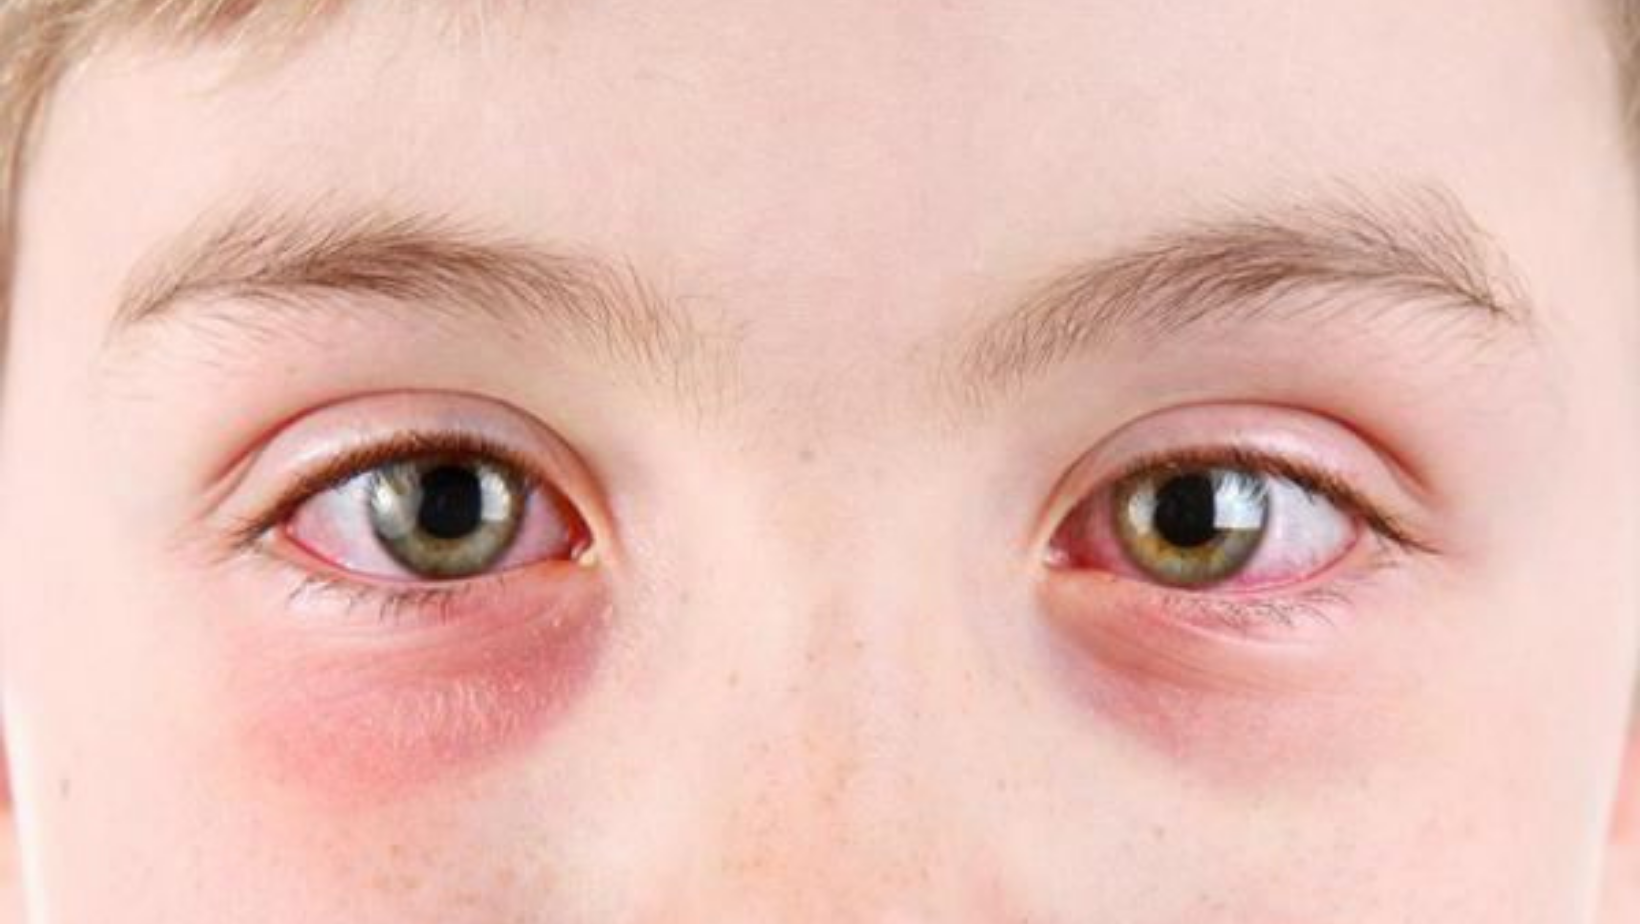 Pollinosis. Allergic eye damage